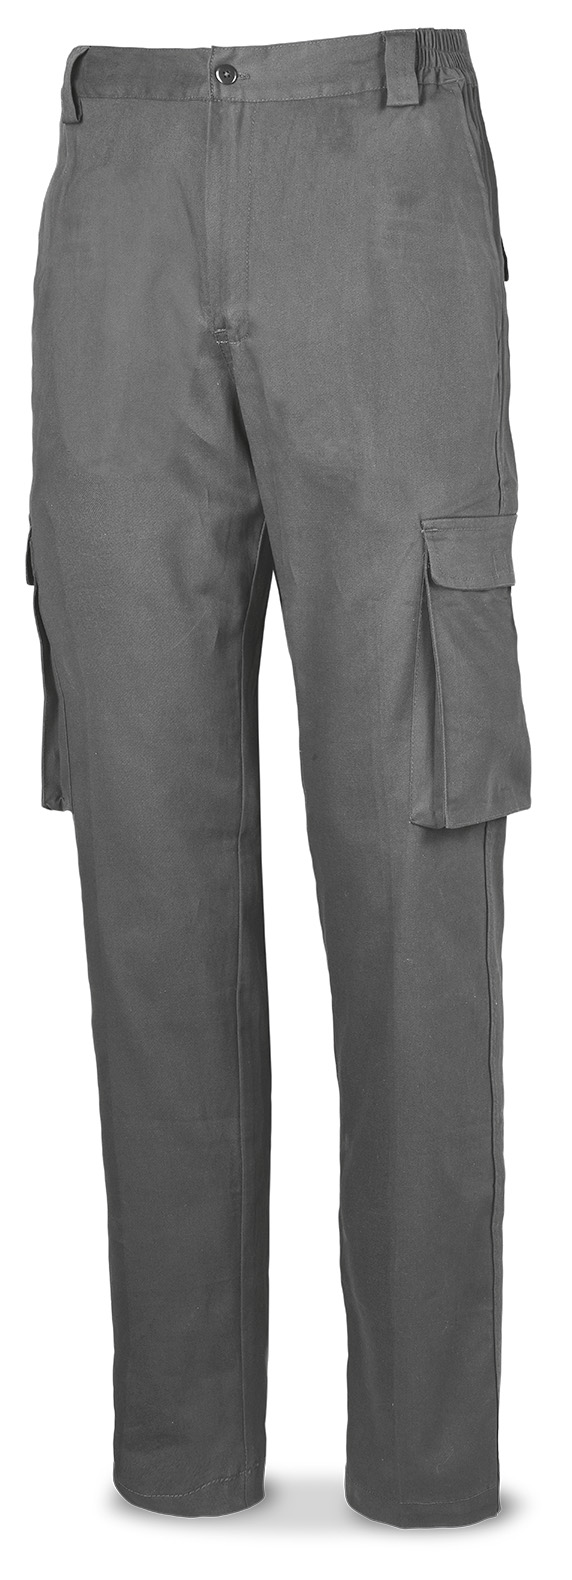 588-PBSG Workwear Casual Series Basic Stretch Pant